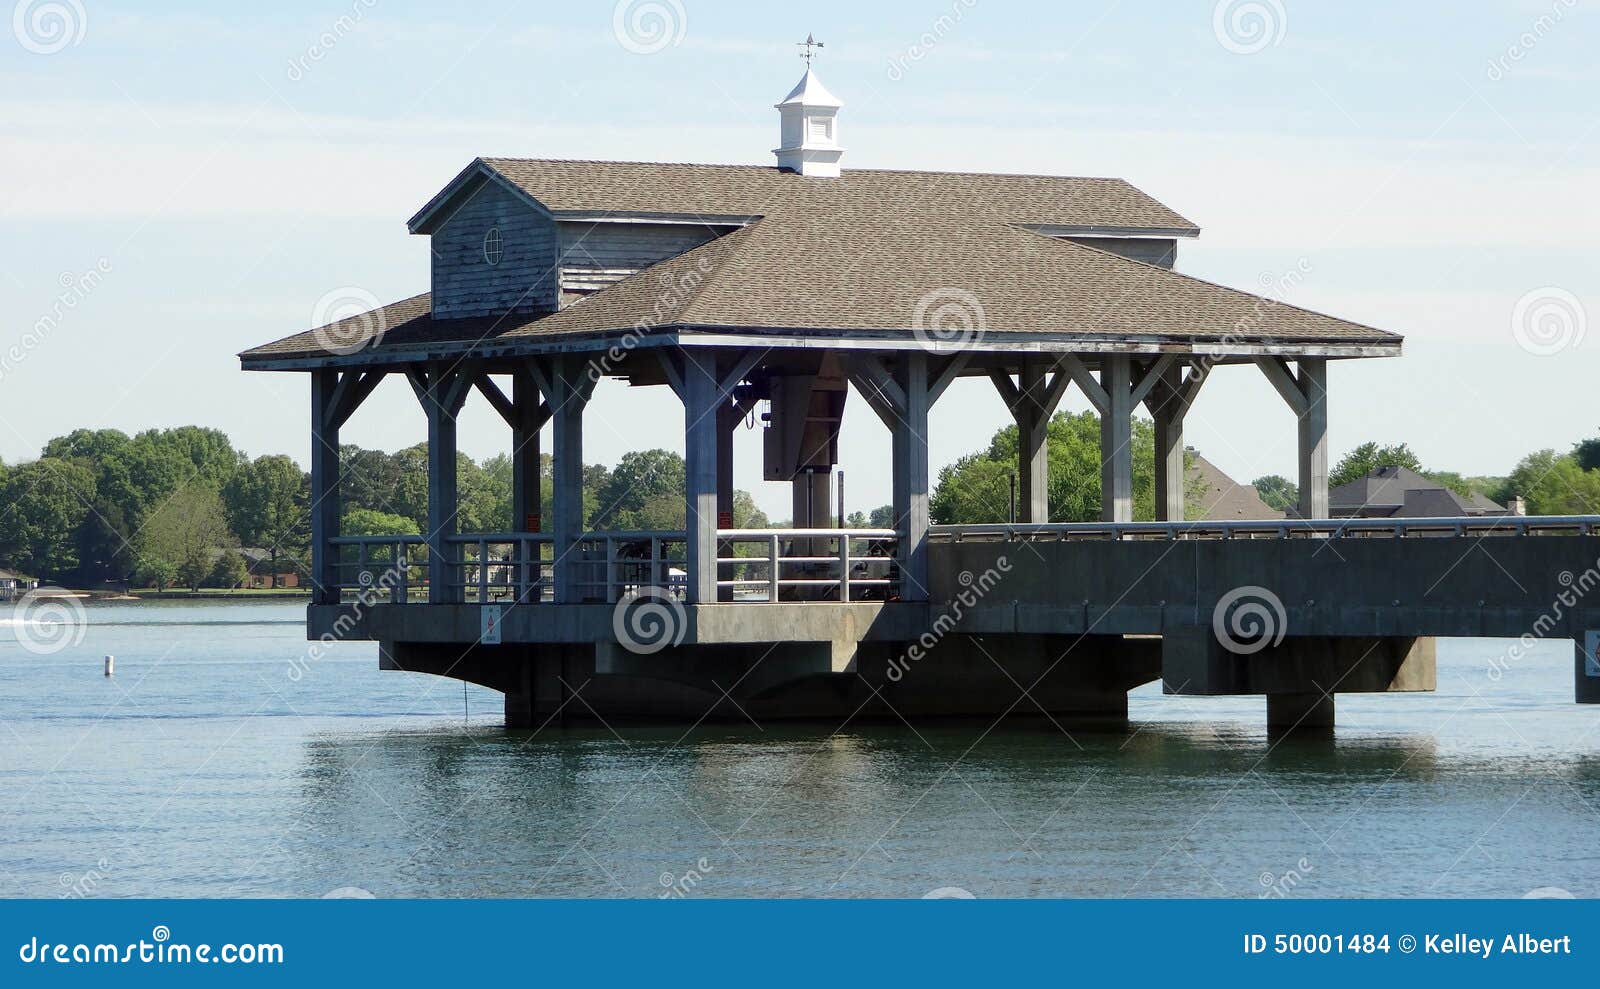 gazebo on pier on lake norman, north carolina